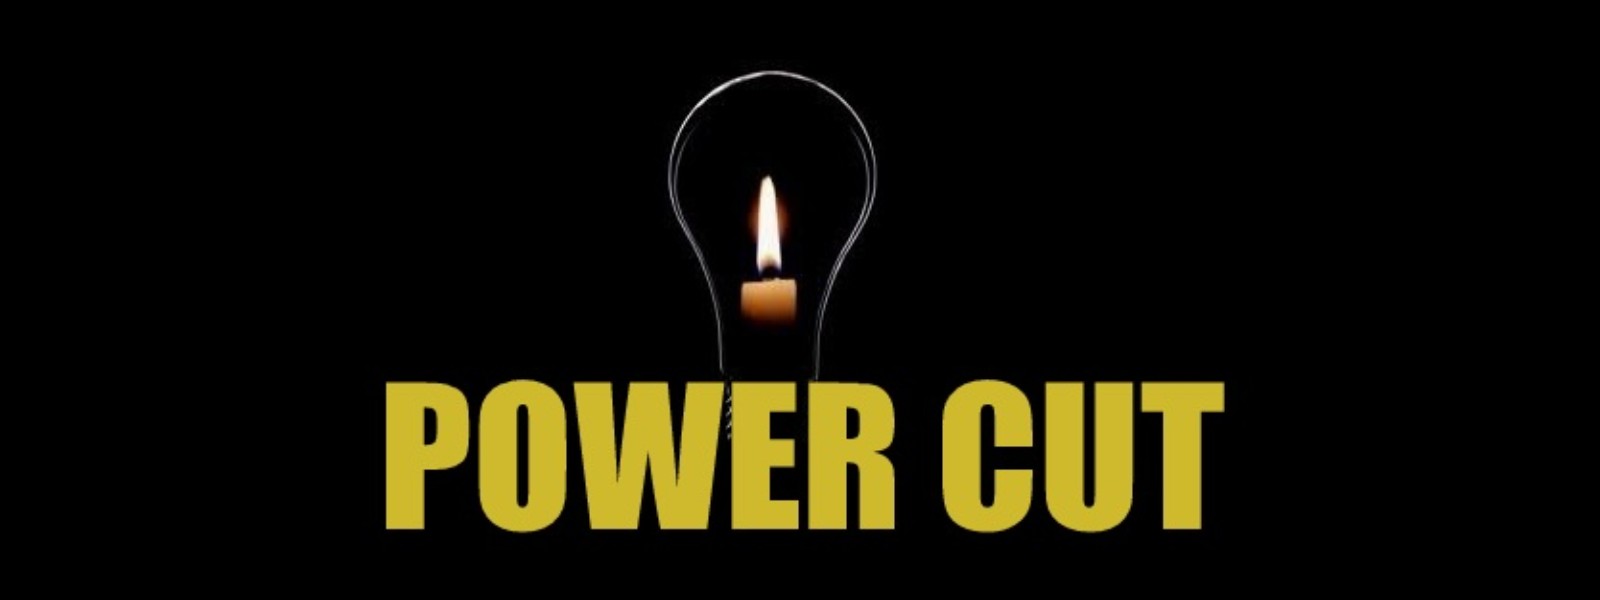 Weekend power cut schedule announced